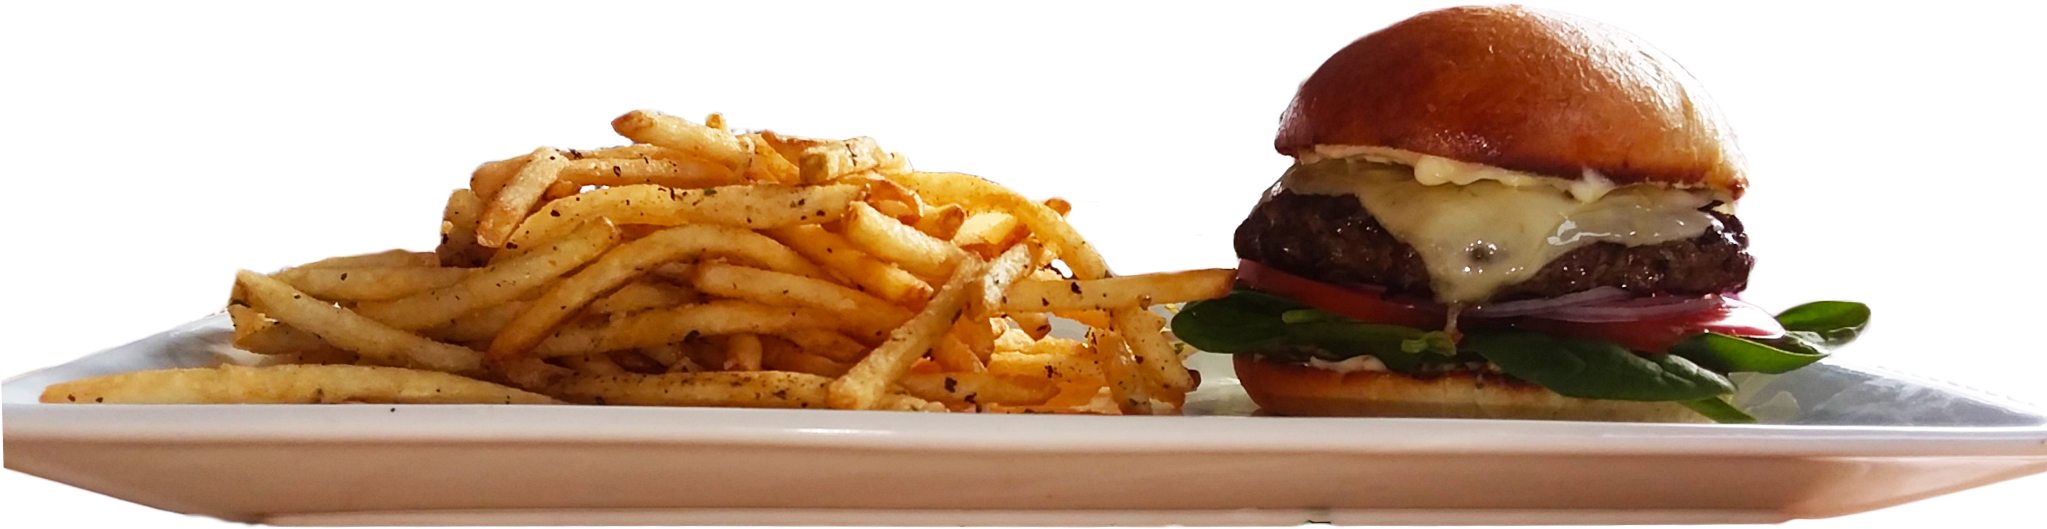 Gourmet Burgerand Seasoned Fries PNG